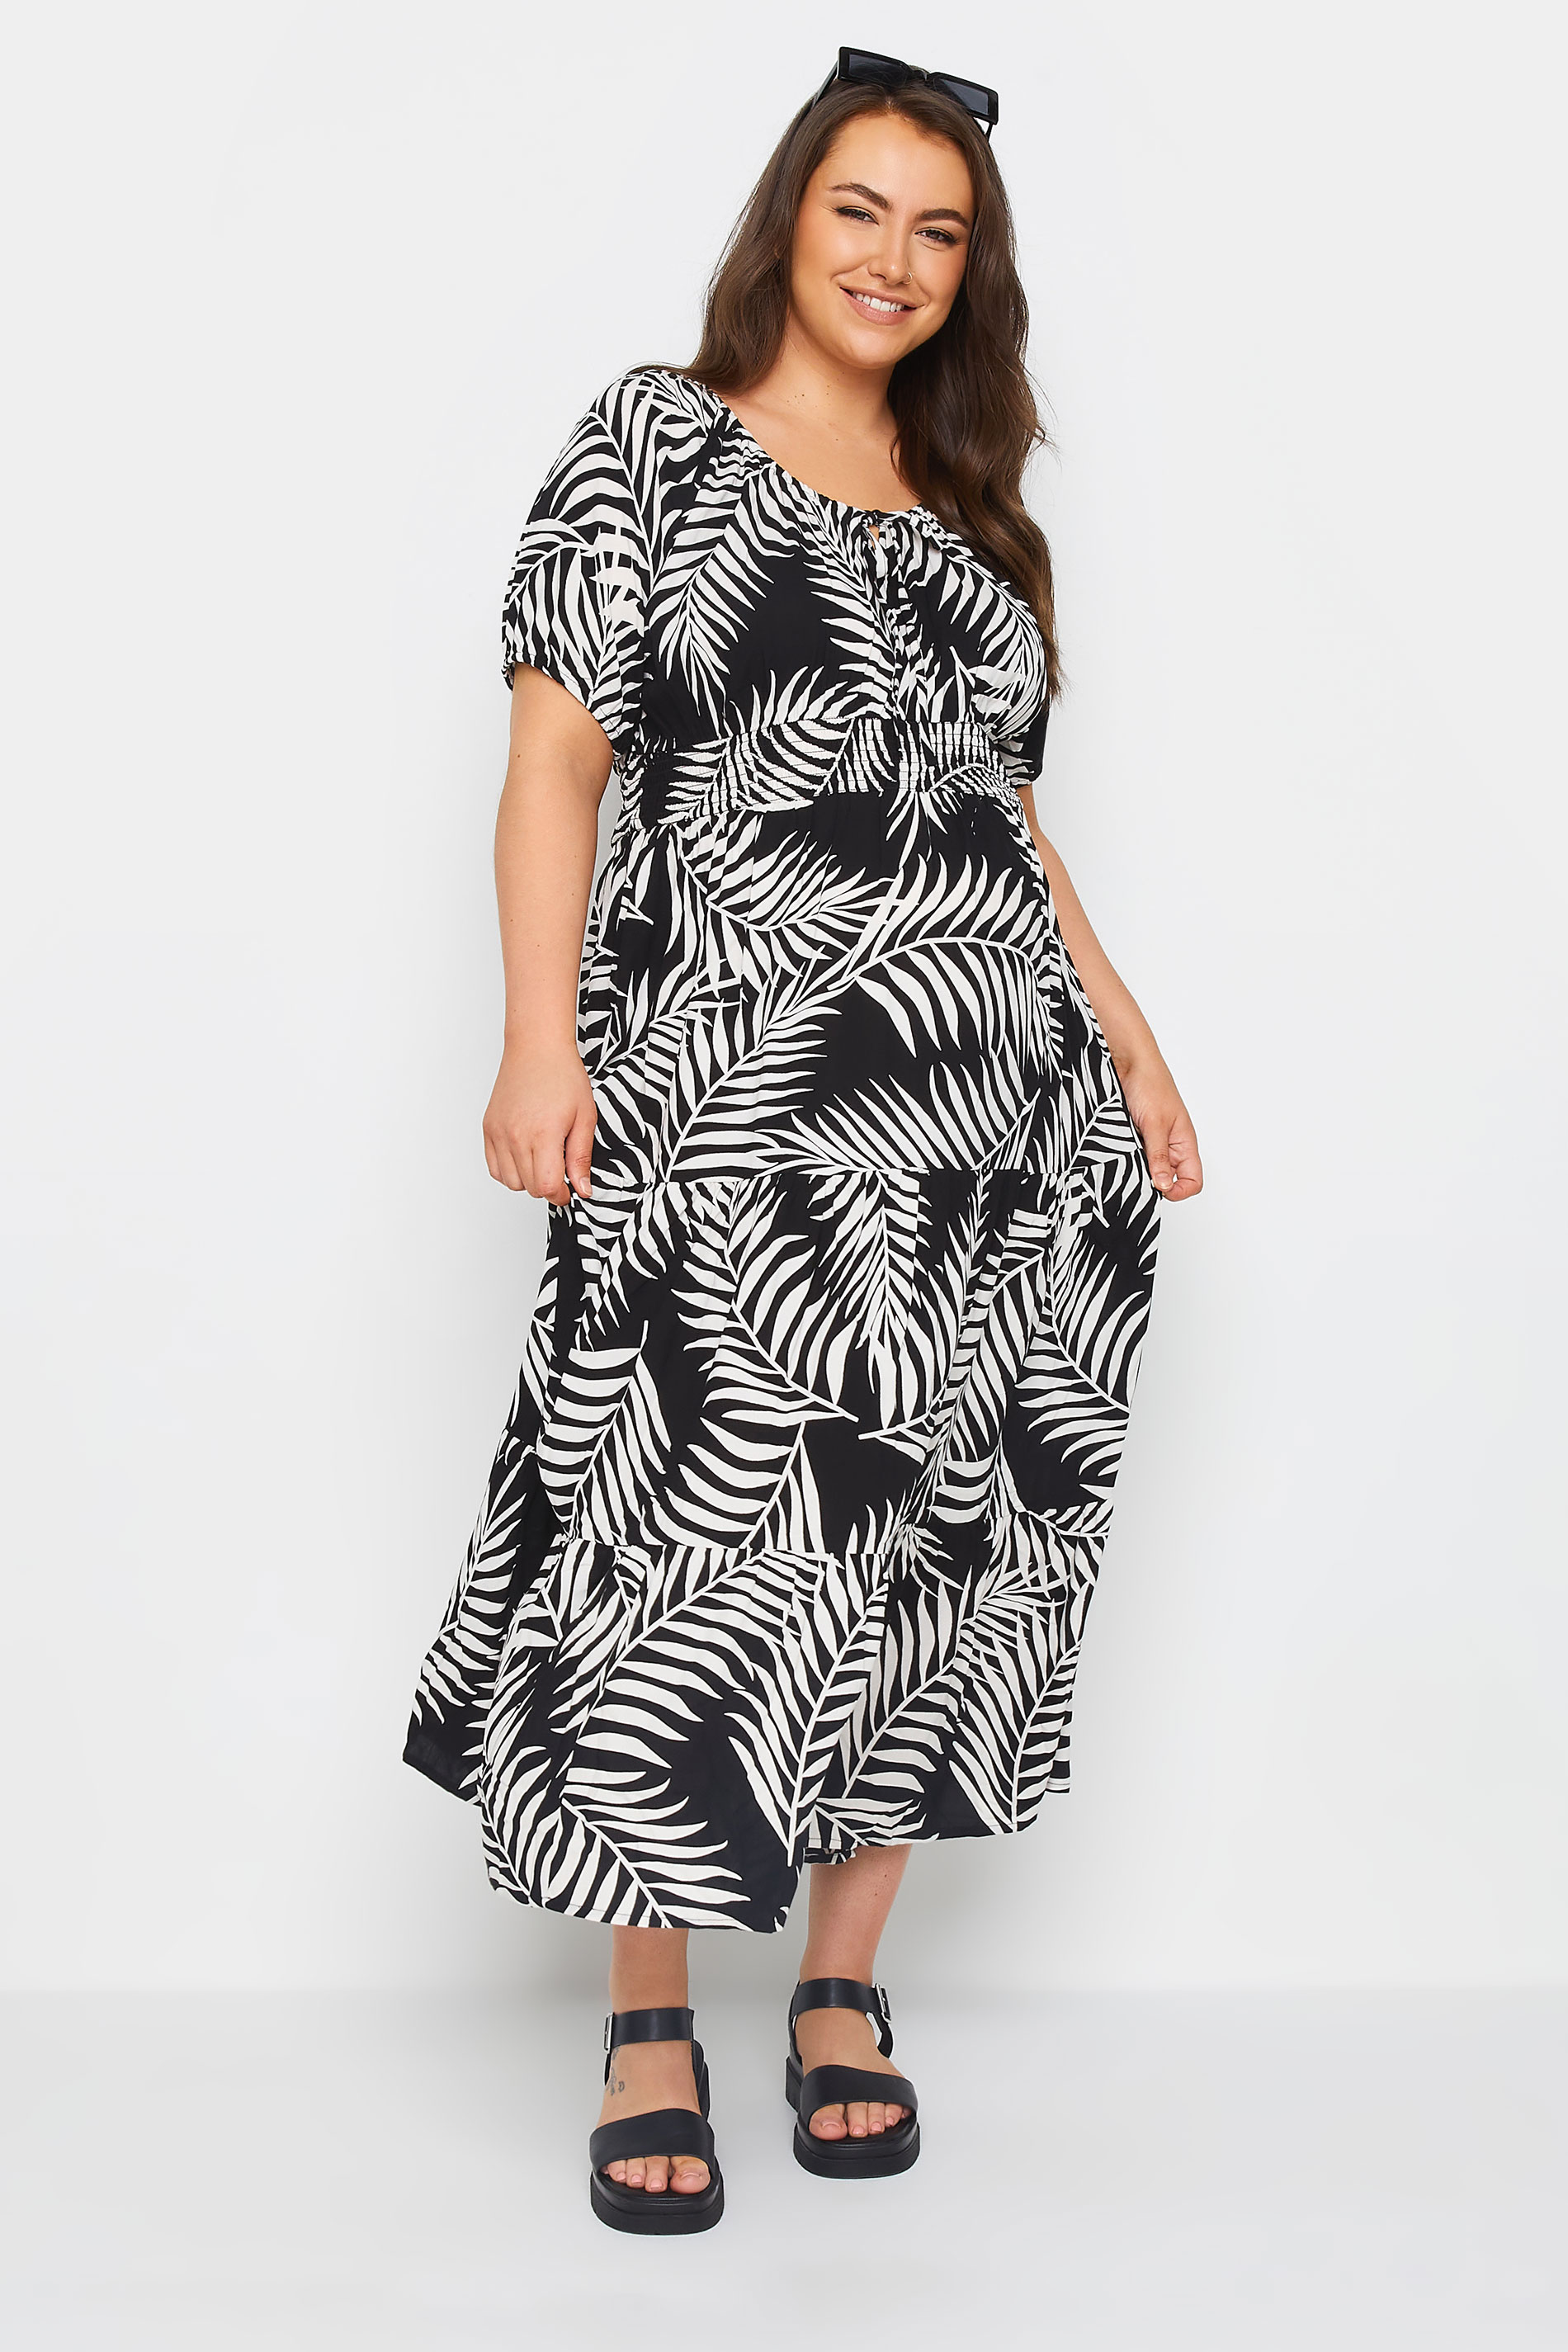 BUMP IT UP MATERNITY Plus Size Black Leaf Print Maxi Dress | Yours Clothing 3